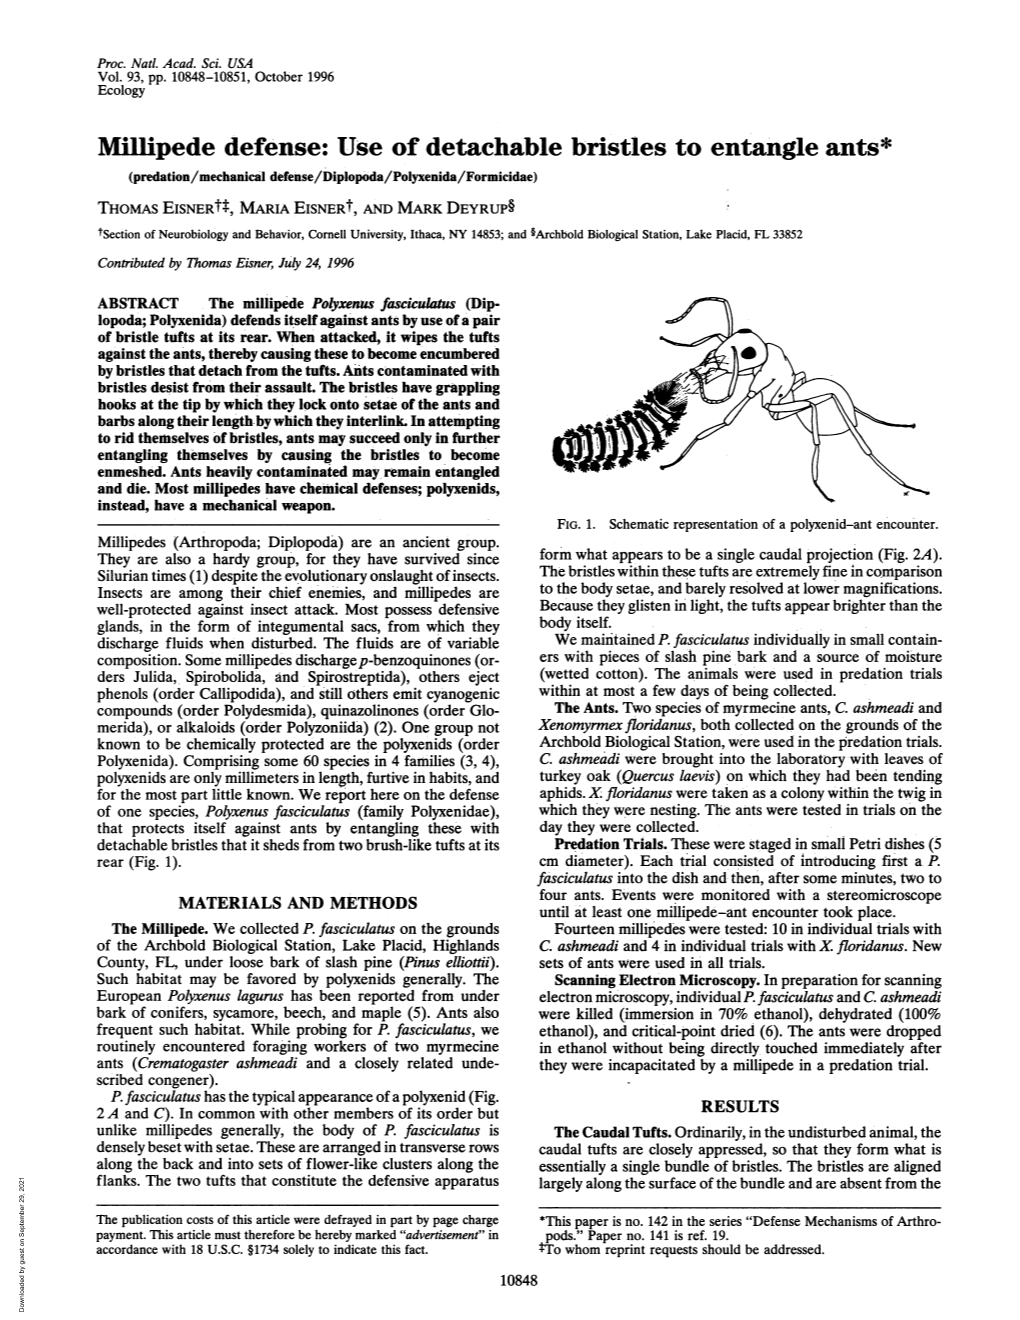 Use of Detachable Bristles to Entangle Ants